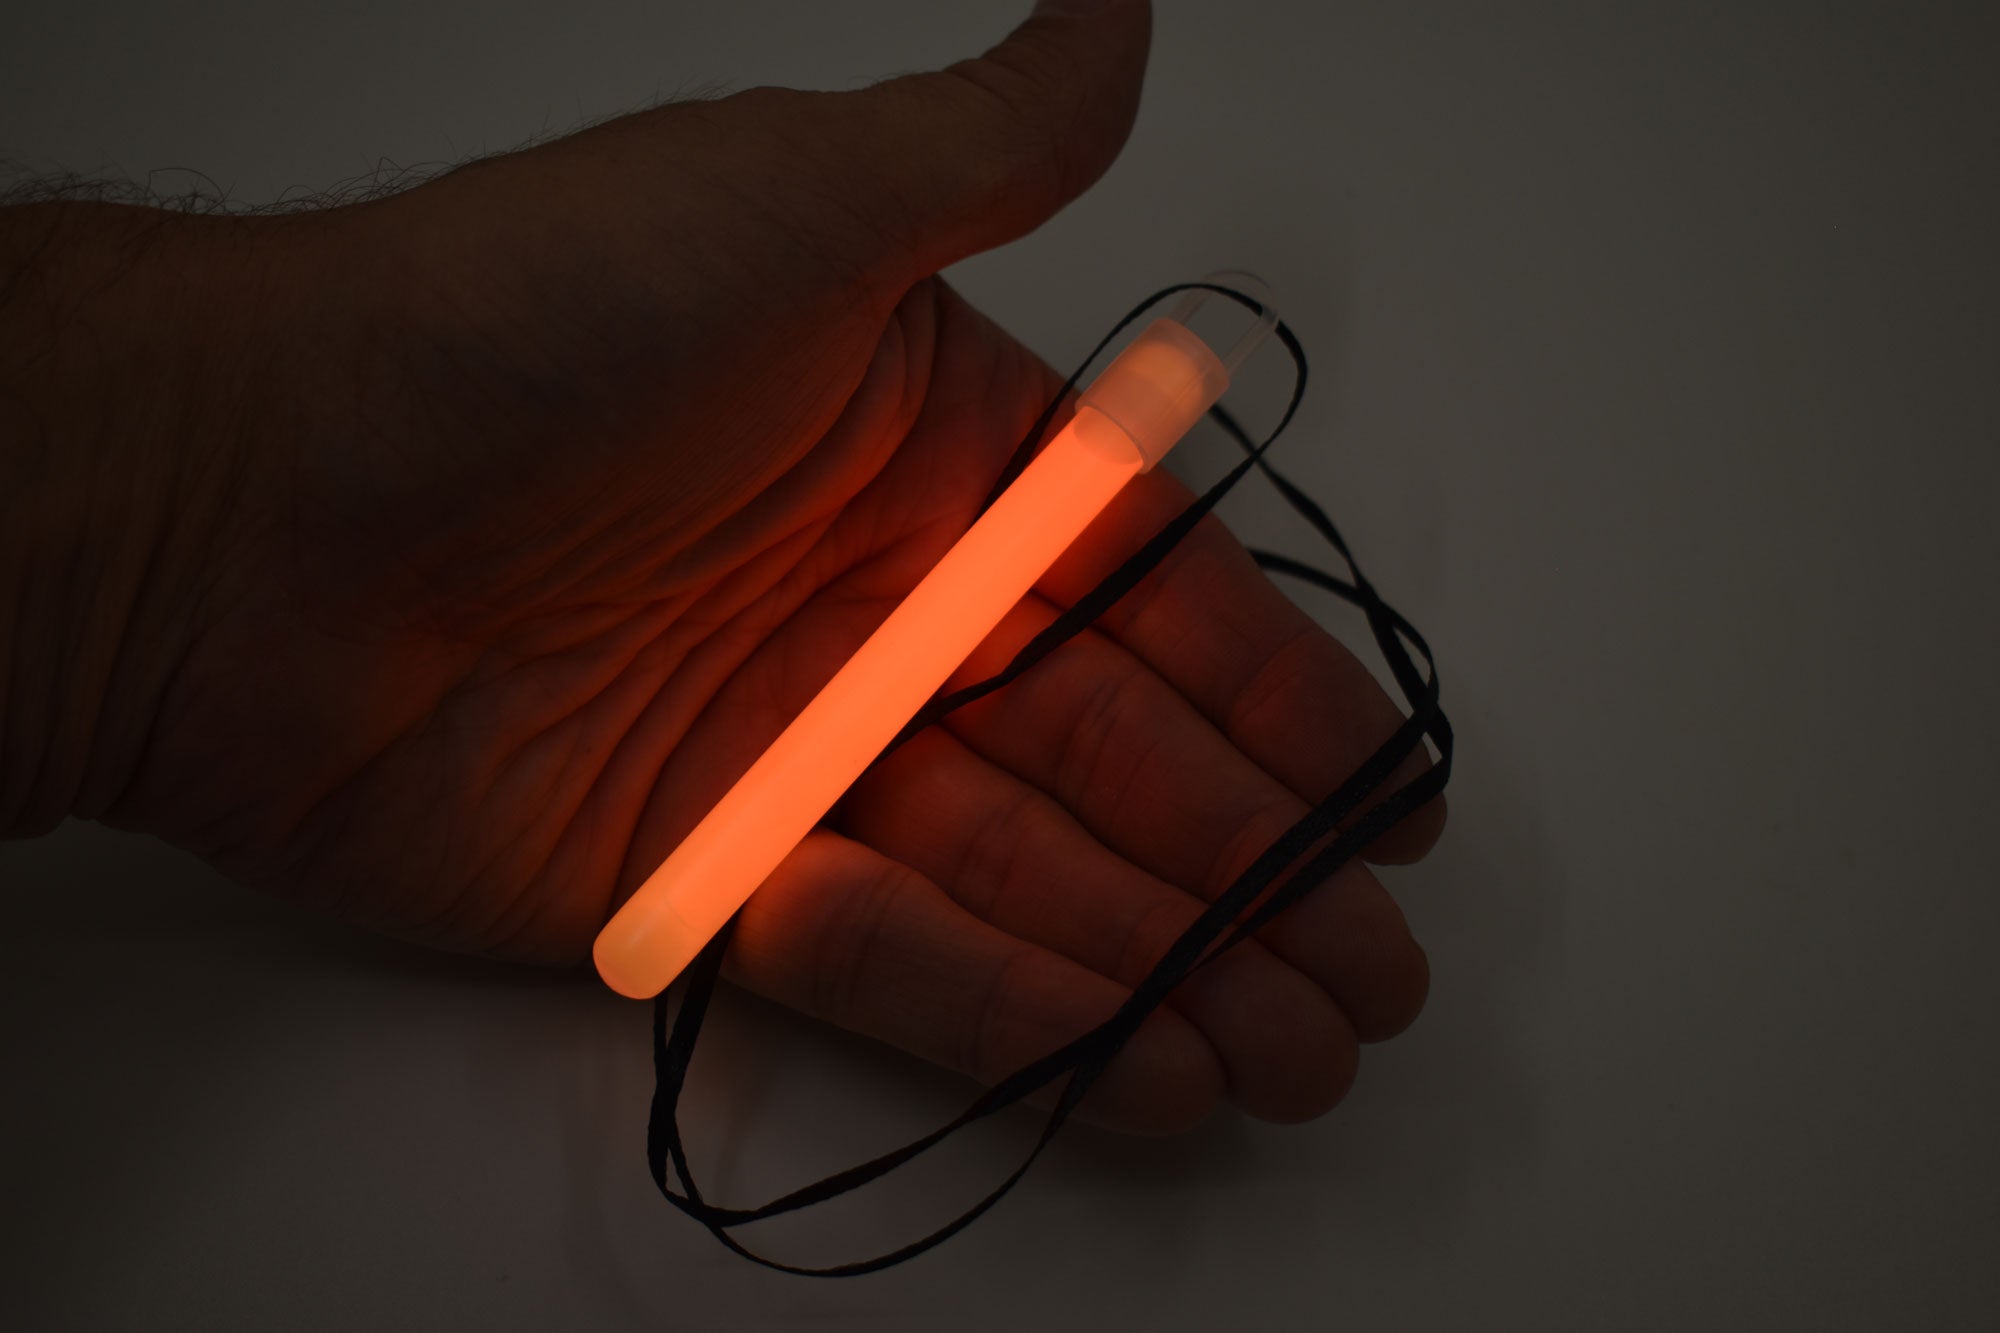 6 Inch Slim Orange Glow Sticks With Lanyards - Pack of 12